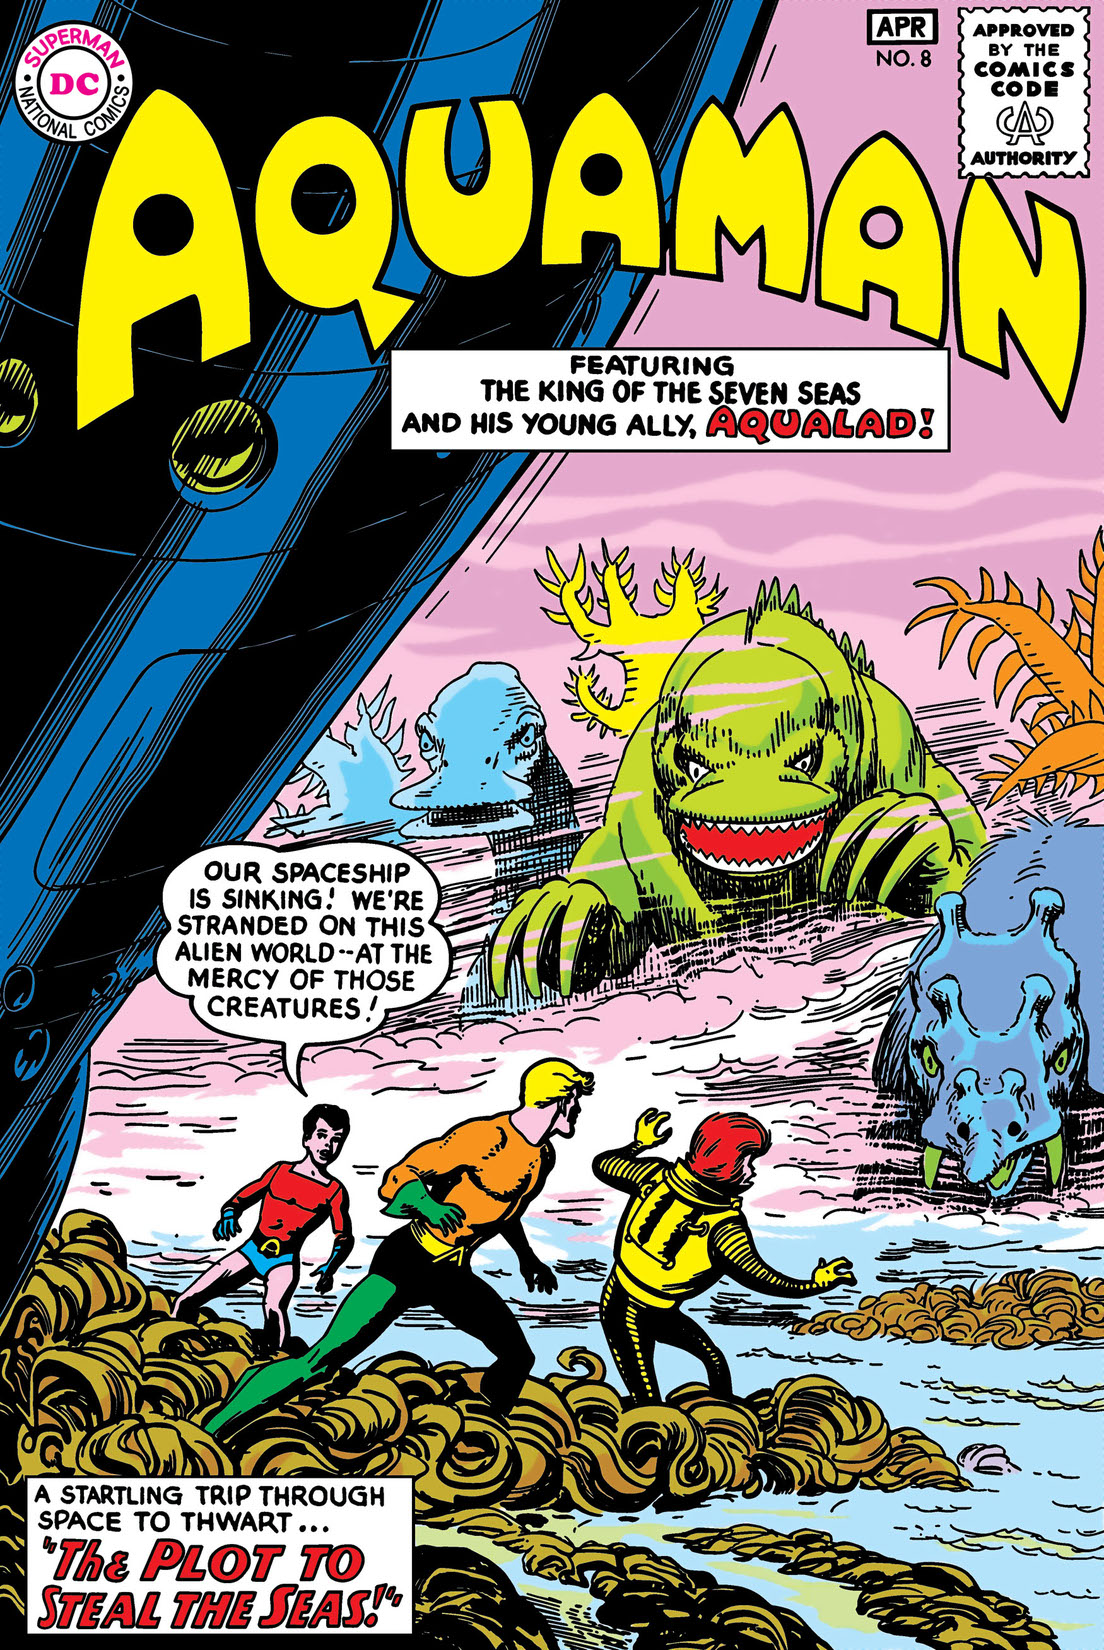 Aquaman (1962-) #8 preview images